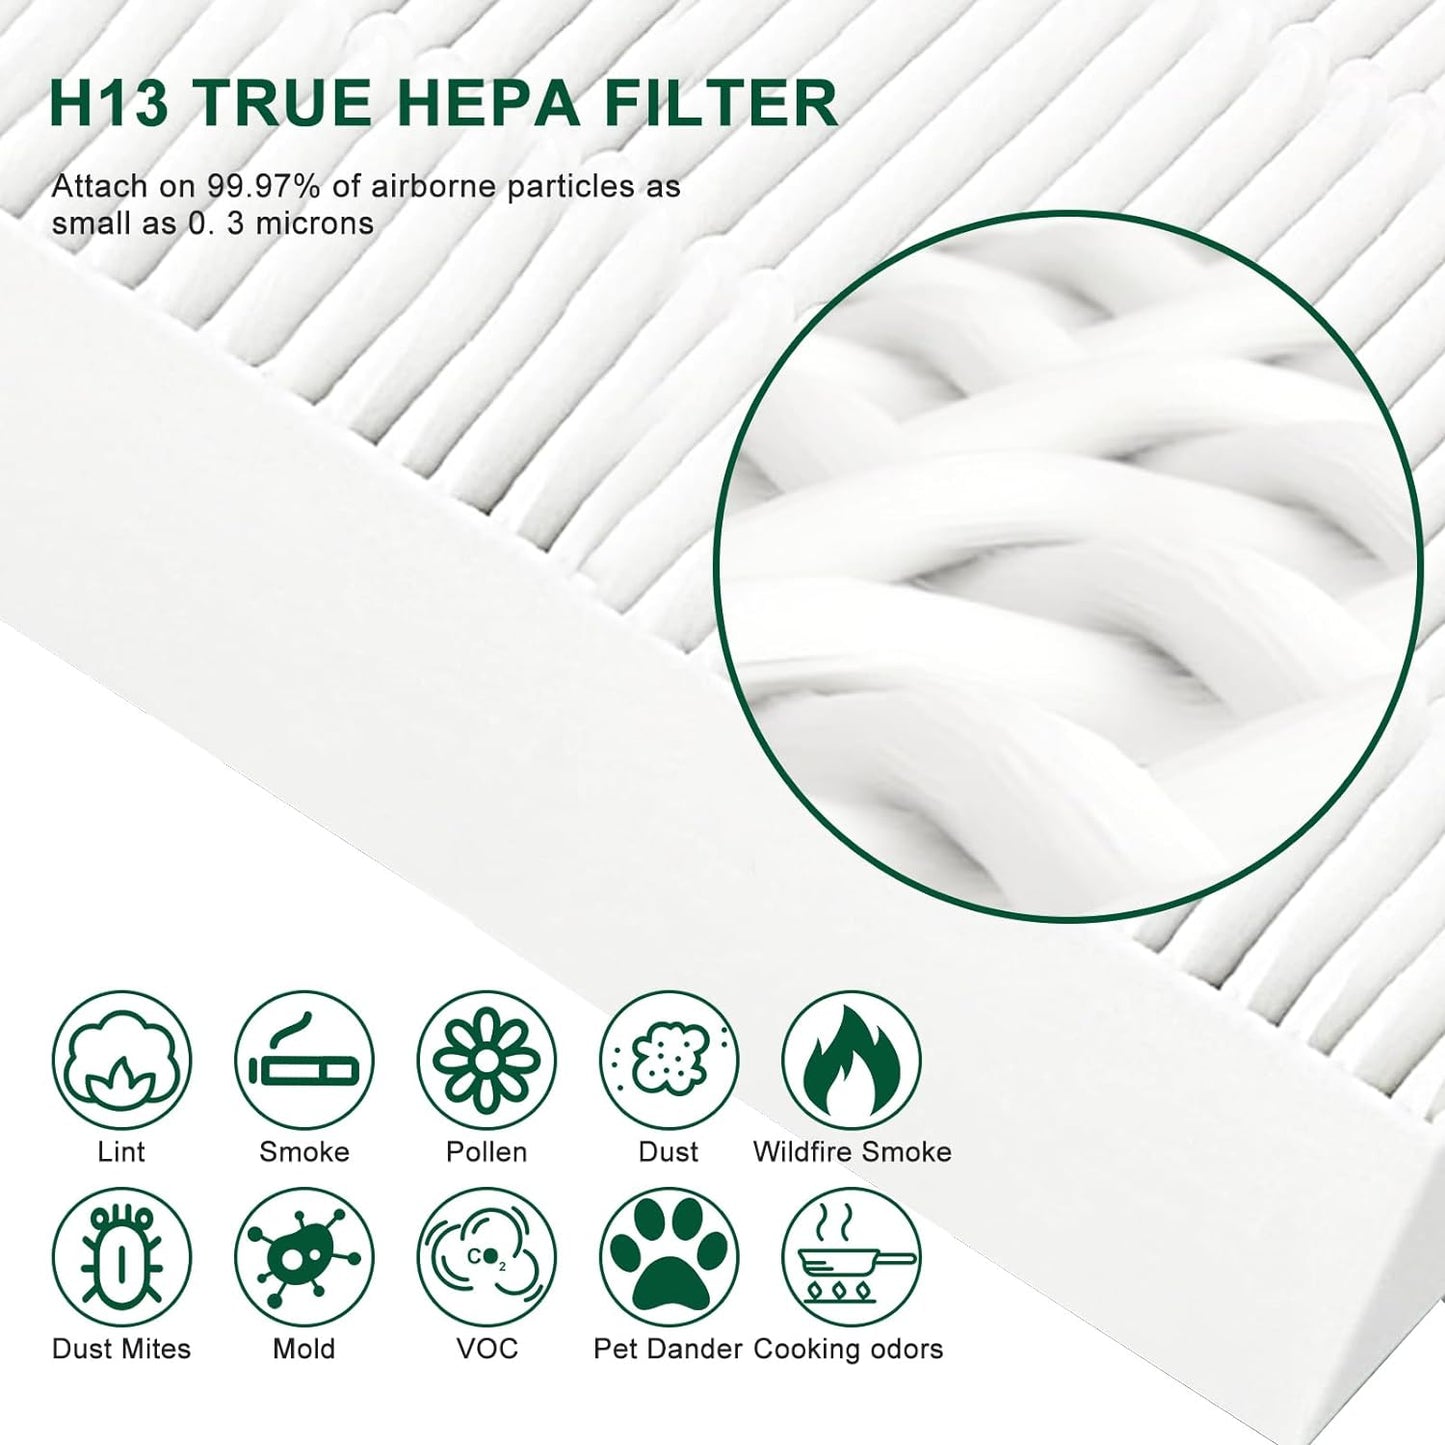 4 Pack Febreze Air Purifier Filter Replacement for FRF102B